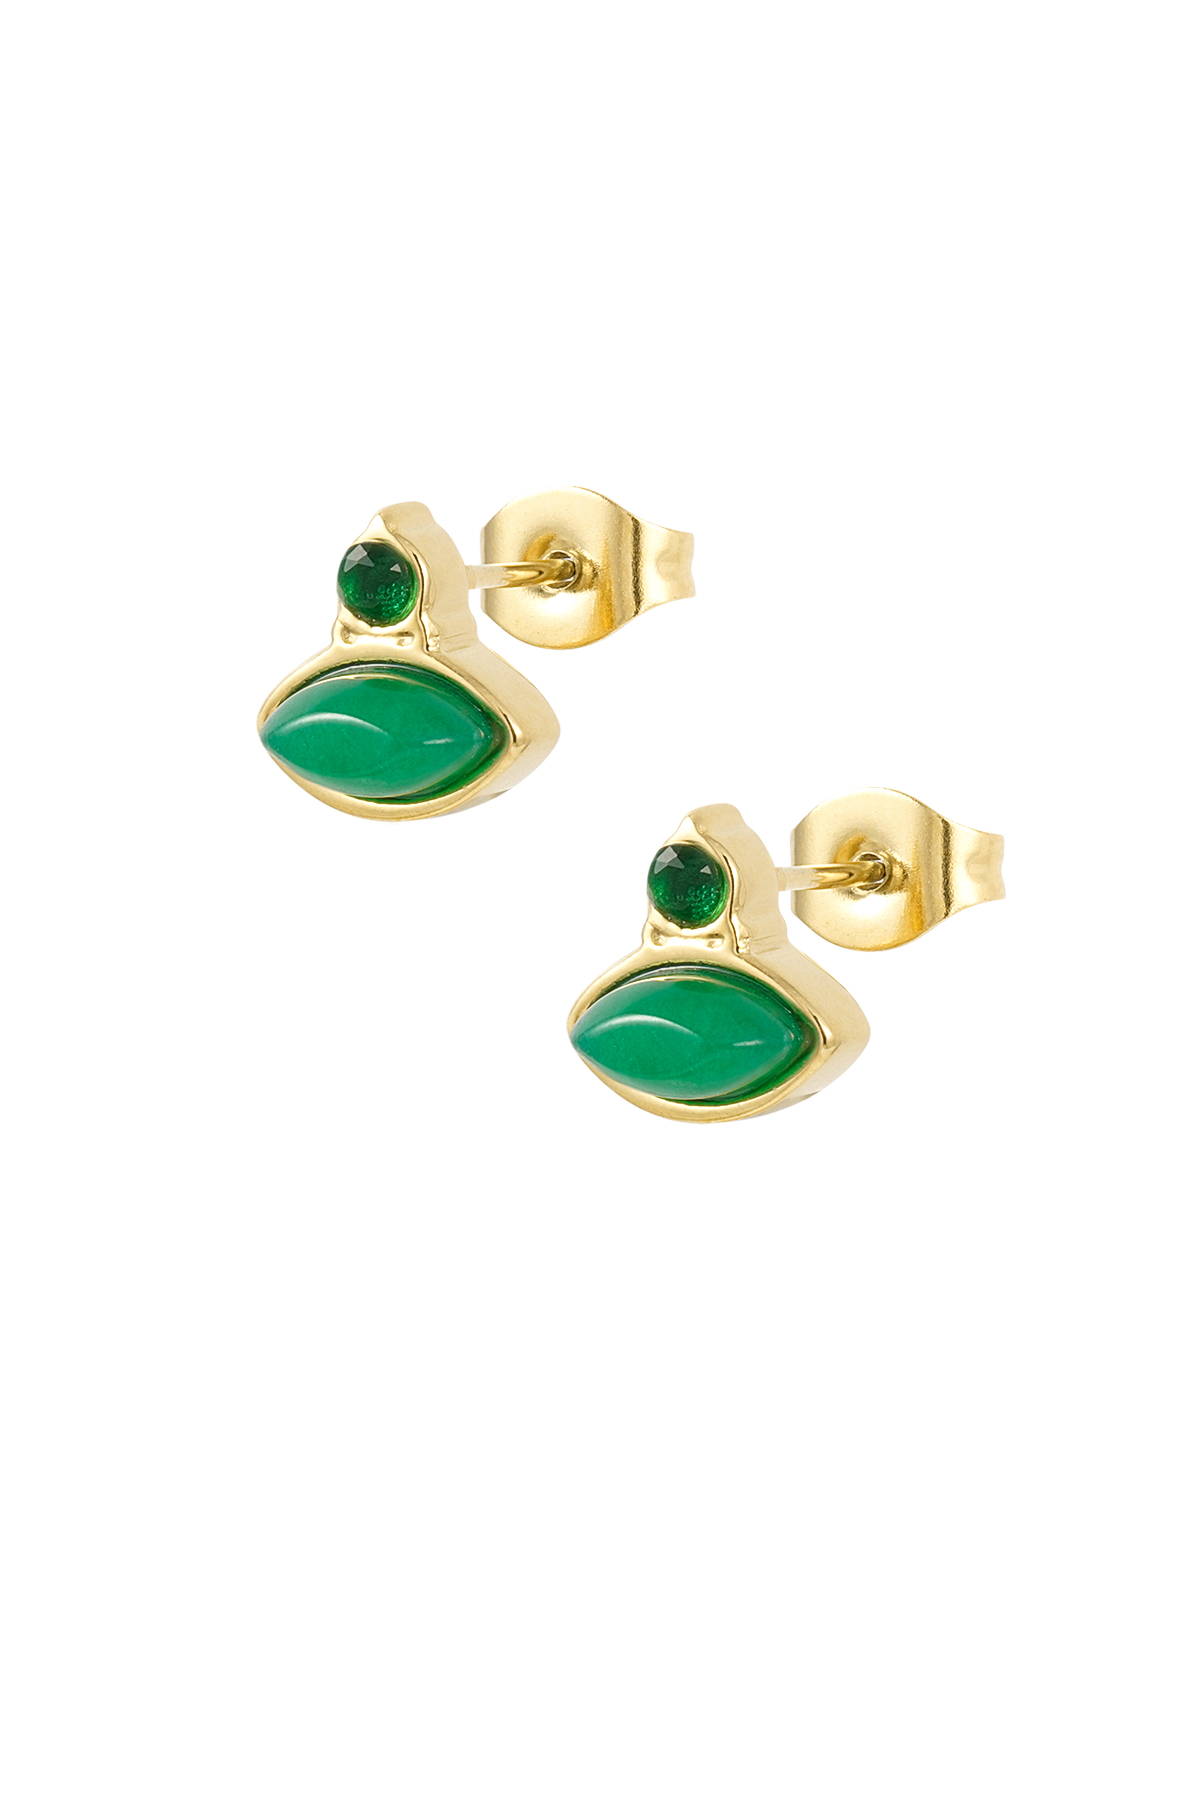 Vintage earrings rhinestone studs - emerald green